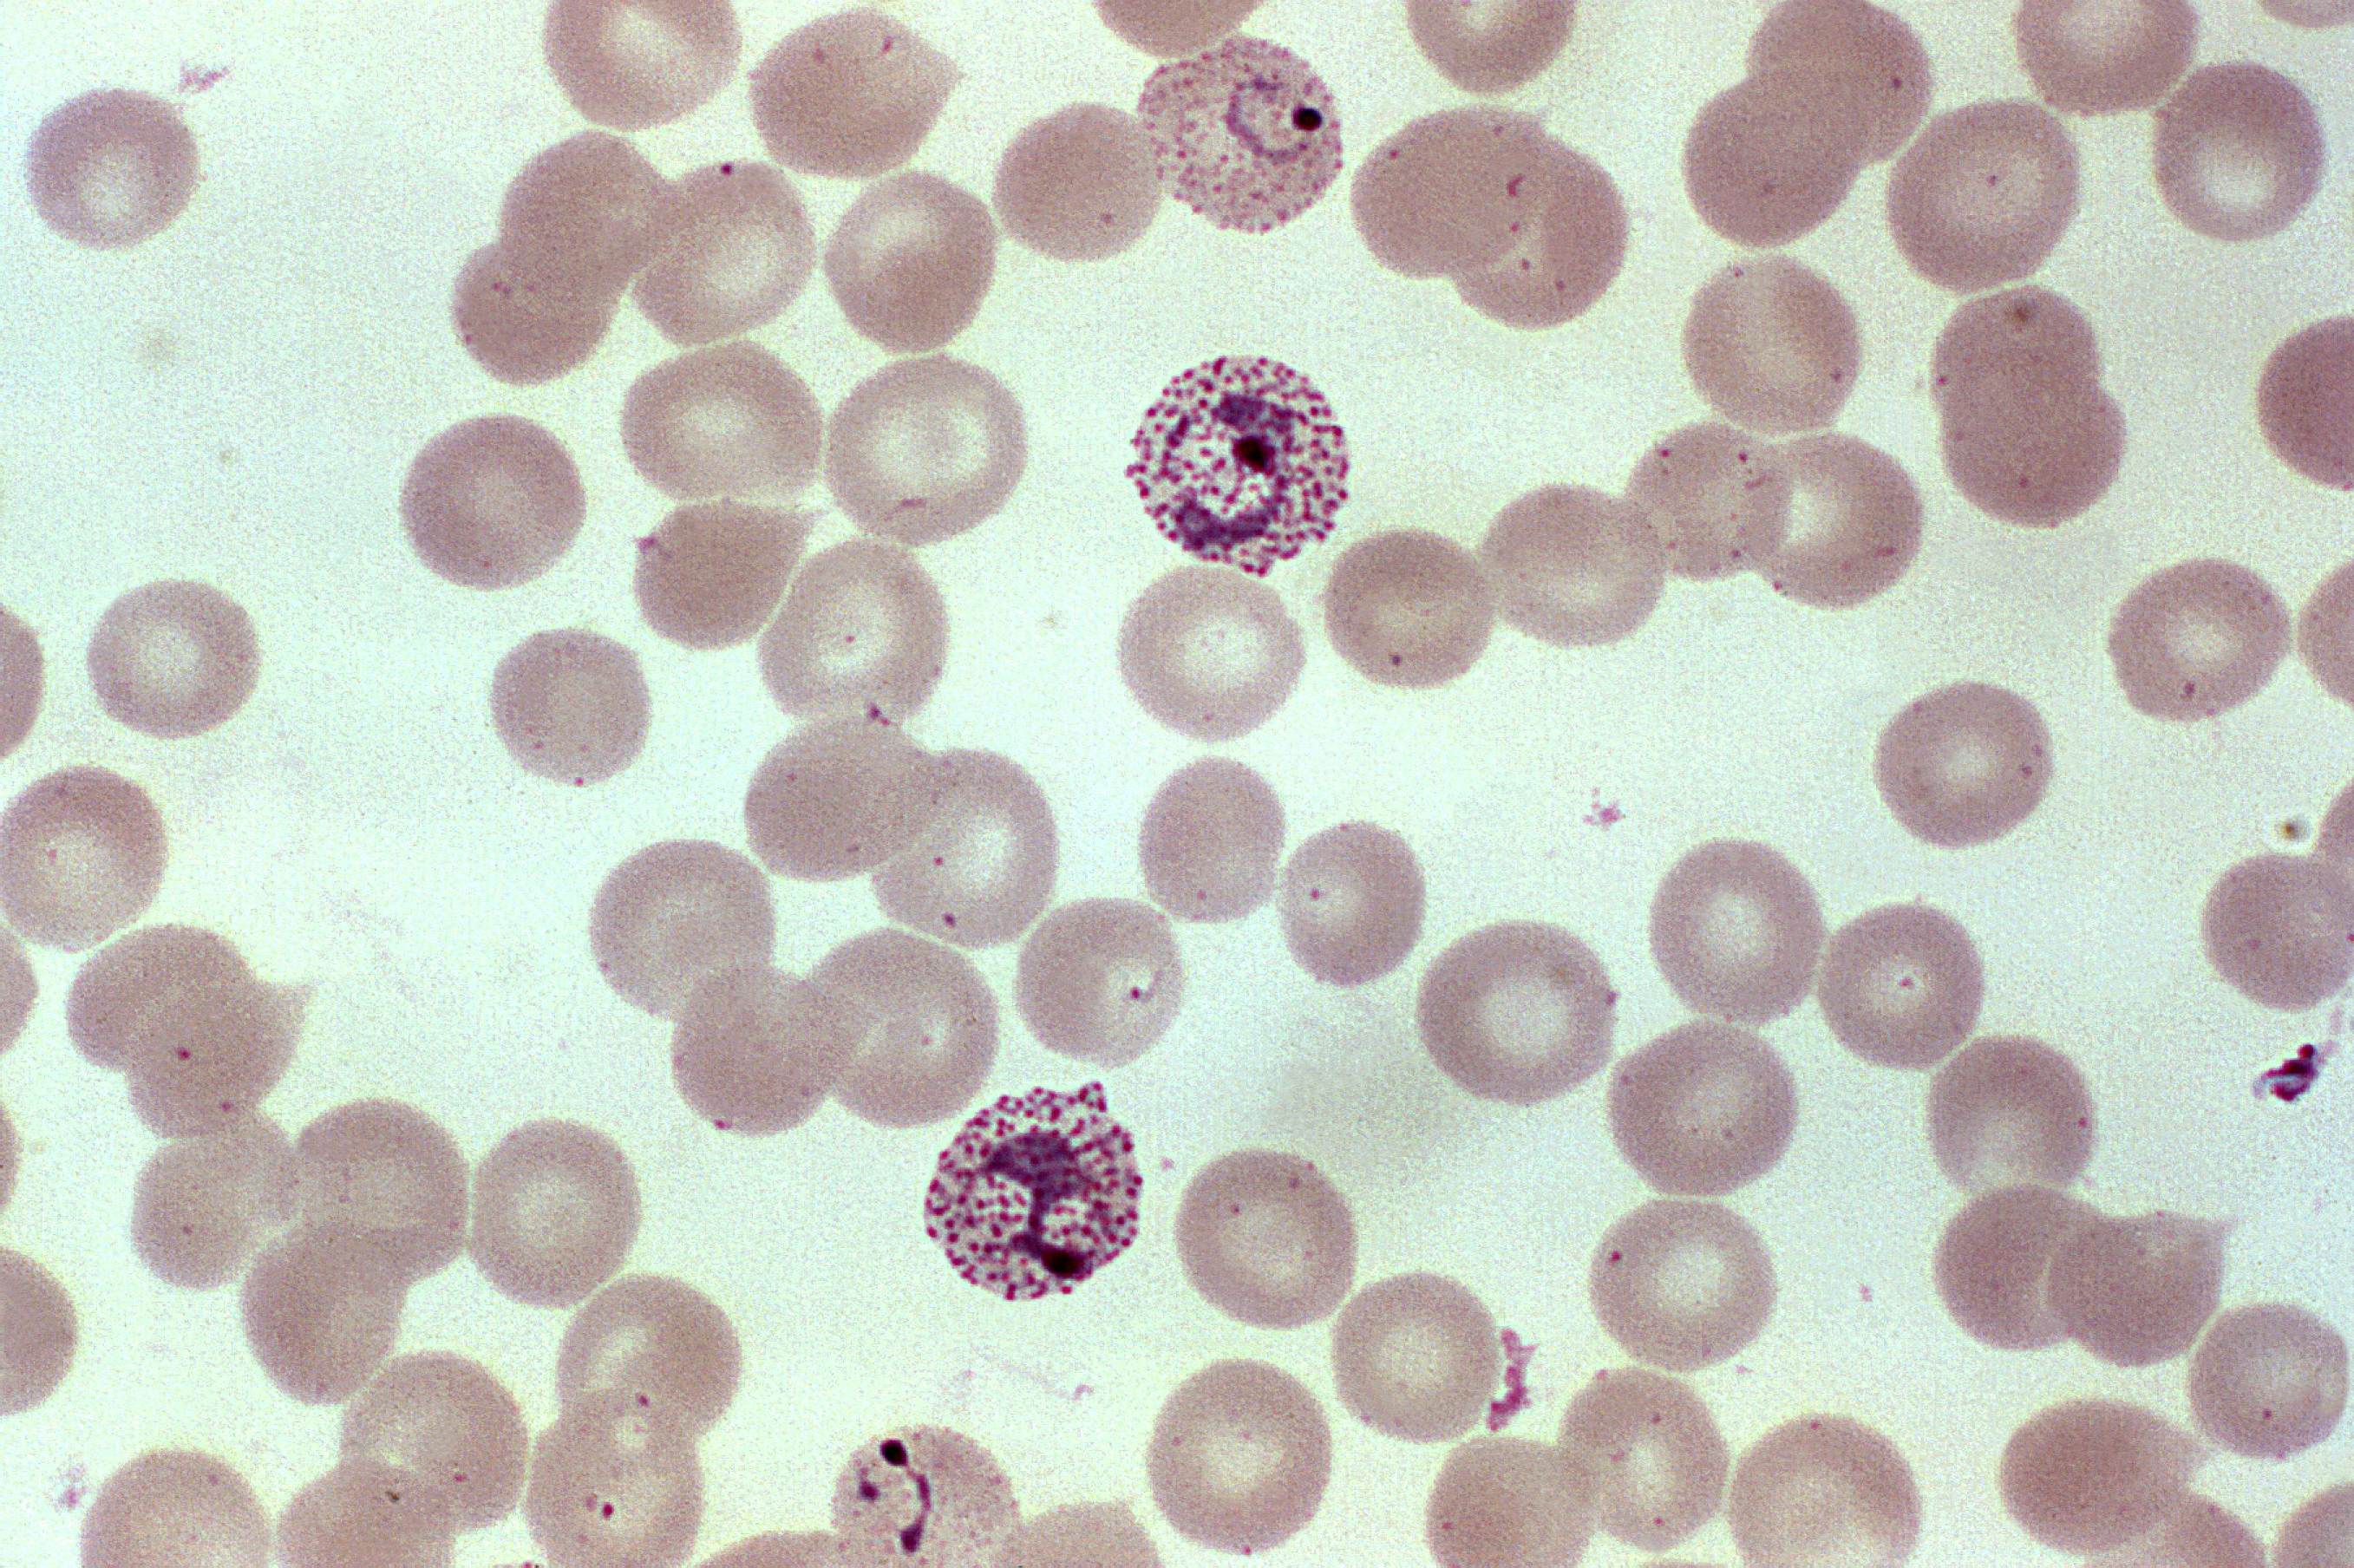 blood-smear-contains-both-immature-and-mature-trophozoites-of-the-plasmodium-vivax-parasite.jpg